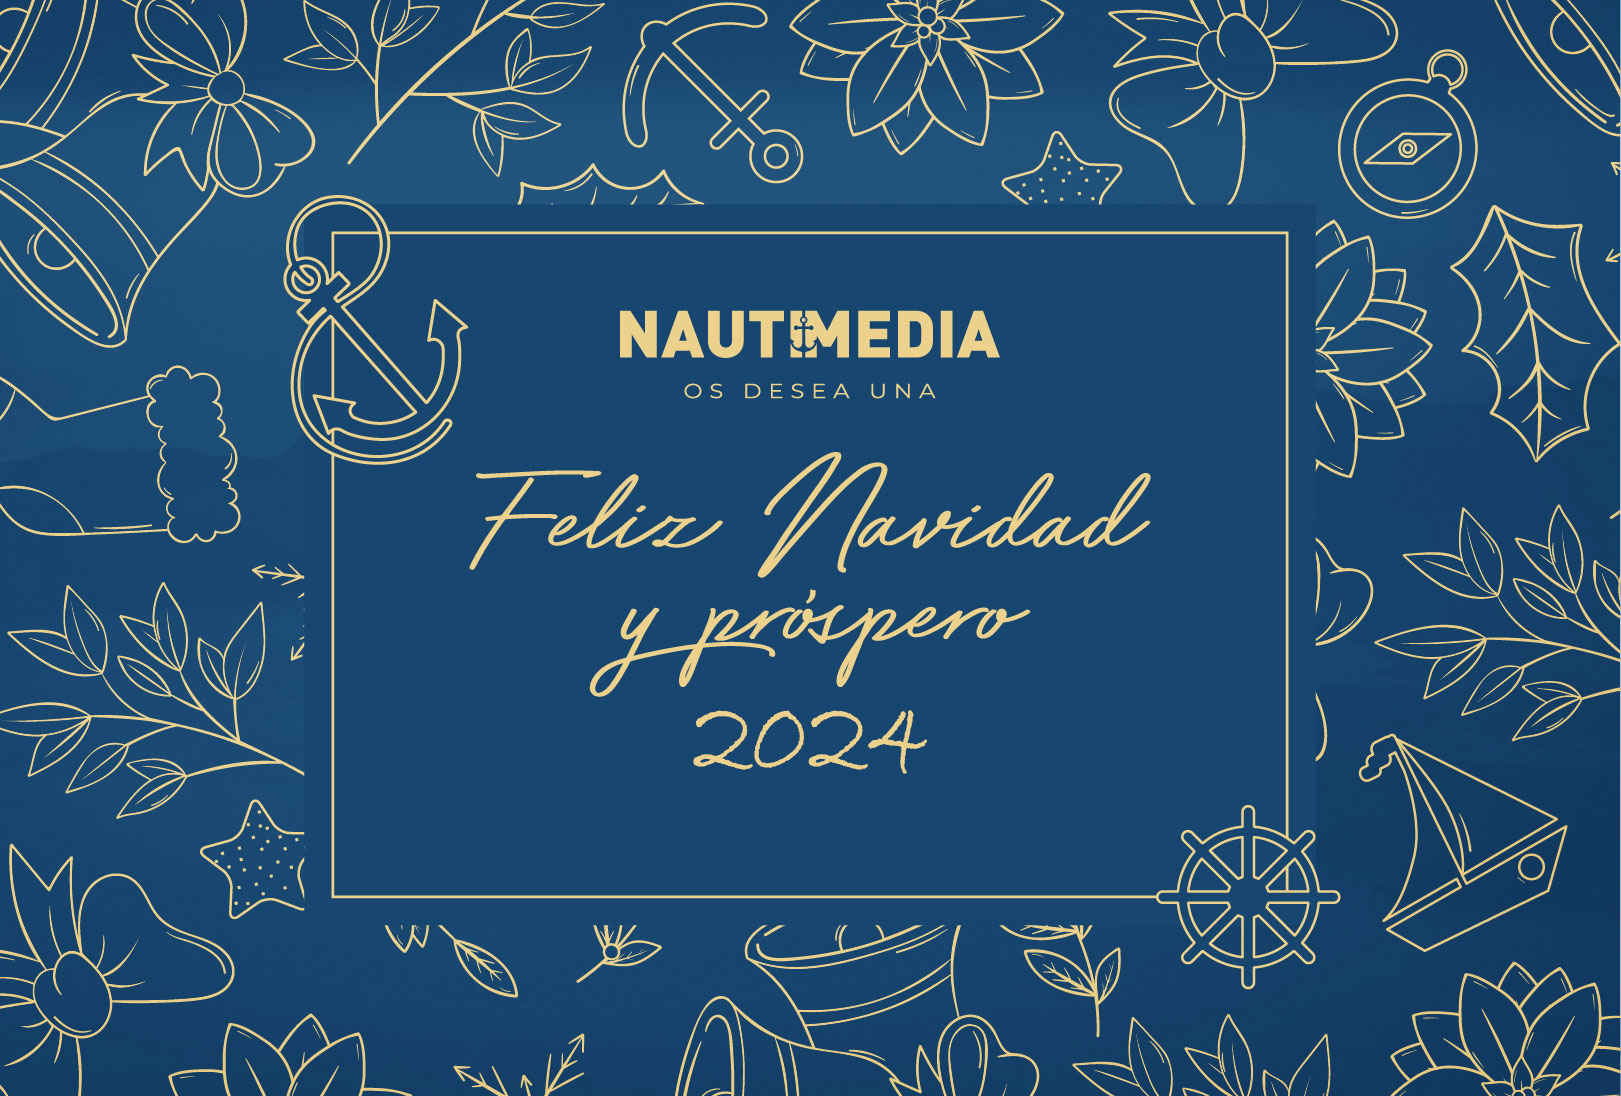 Nautimedia wishes you a great Christmas! 